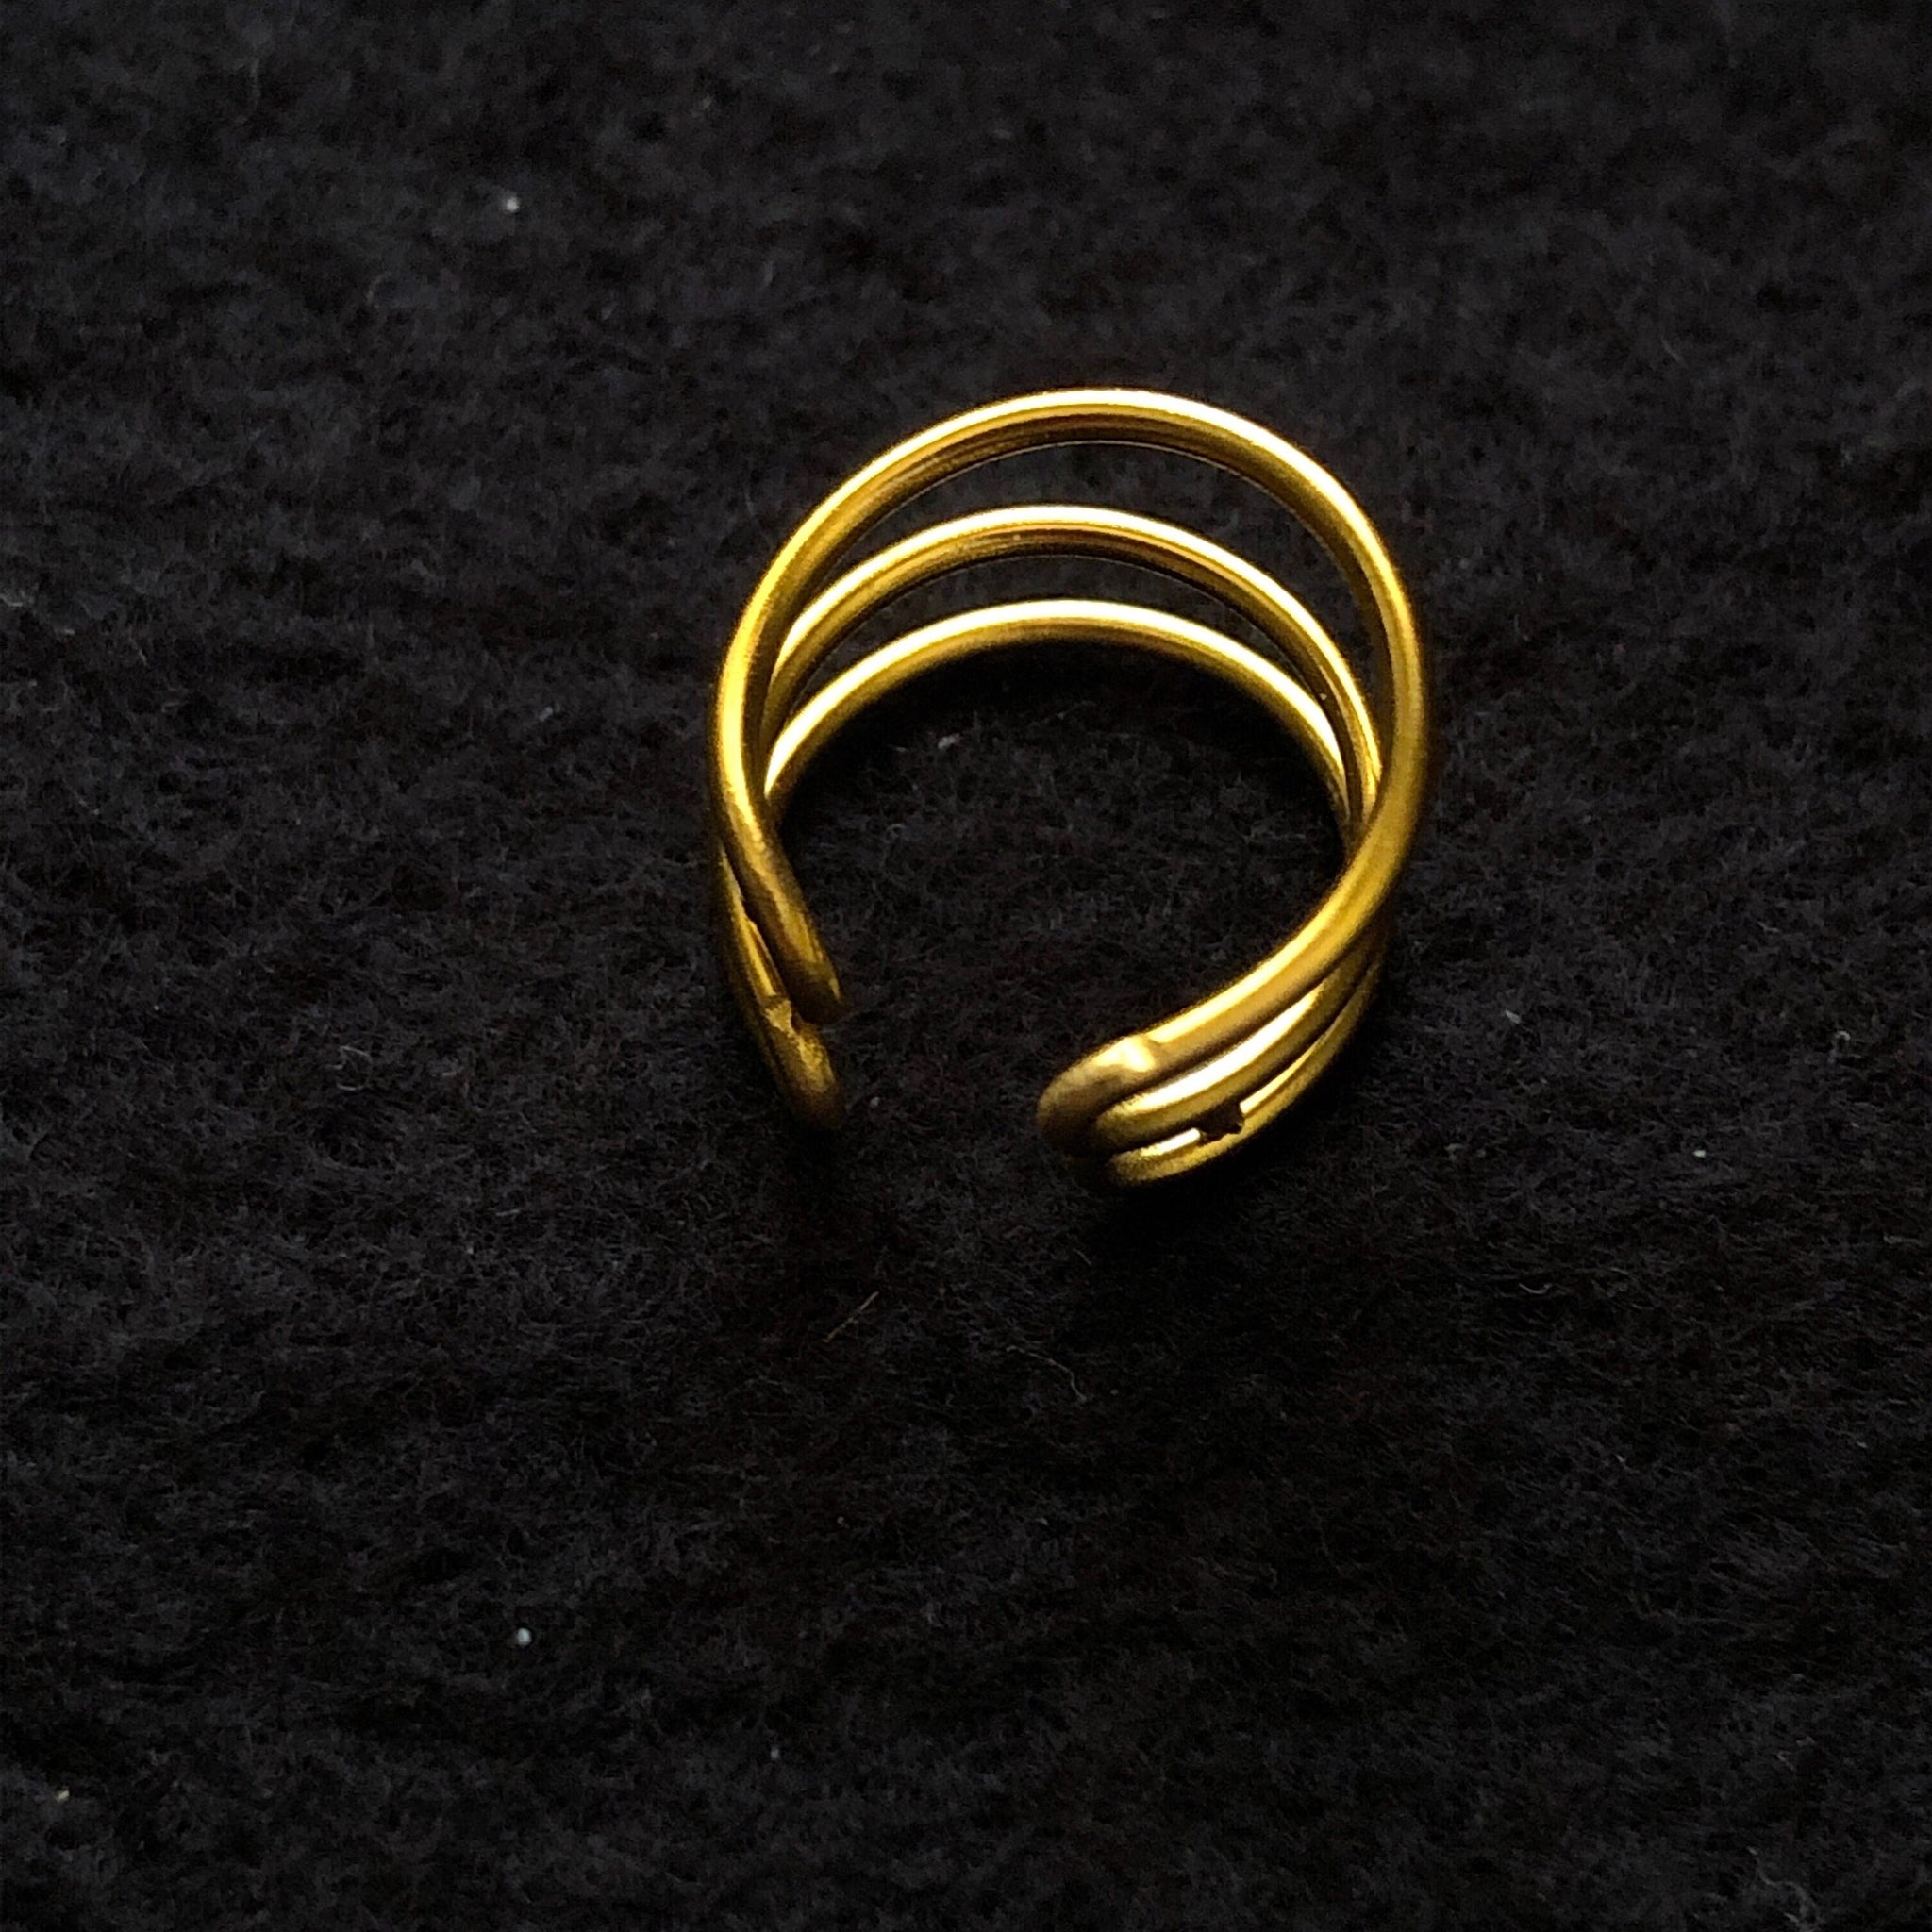 Gold filled triple ear cuff • Invisible clip on earrings • Ear